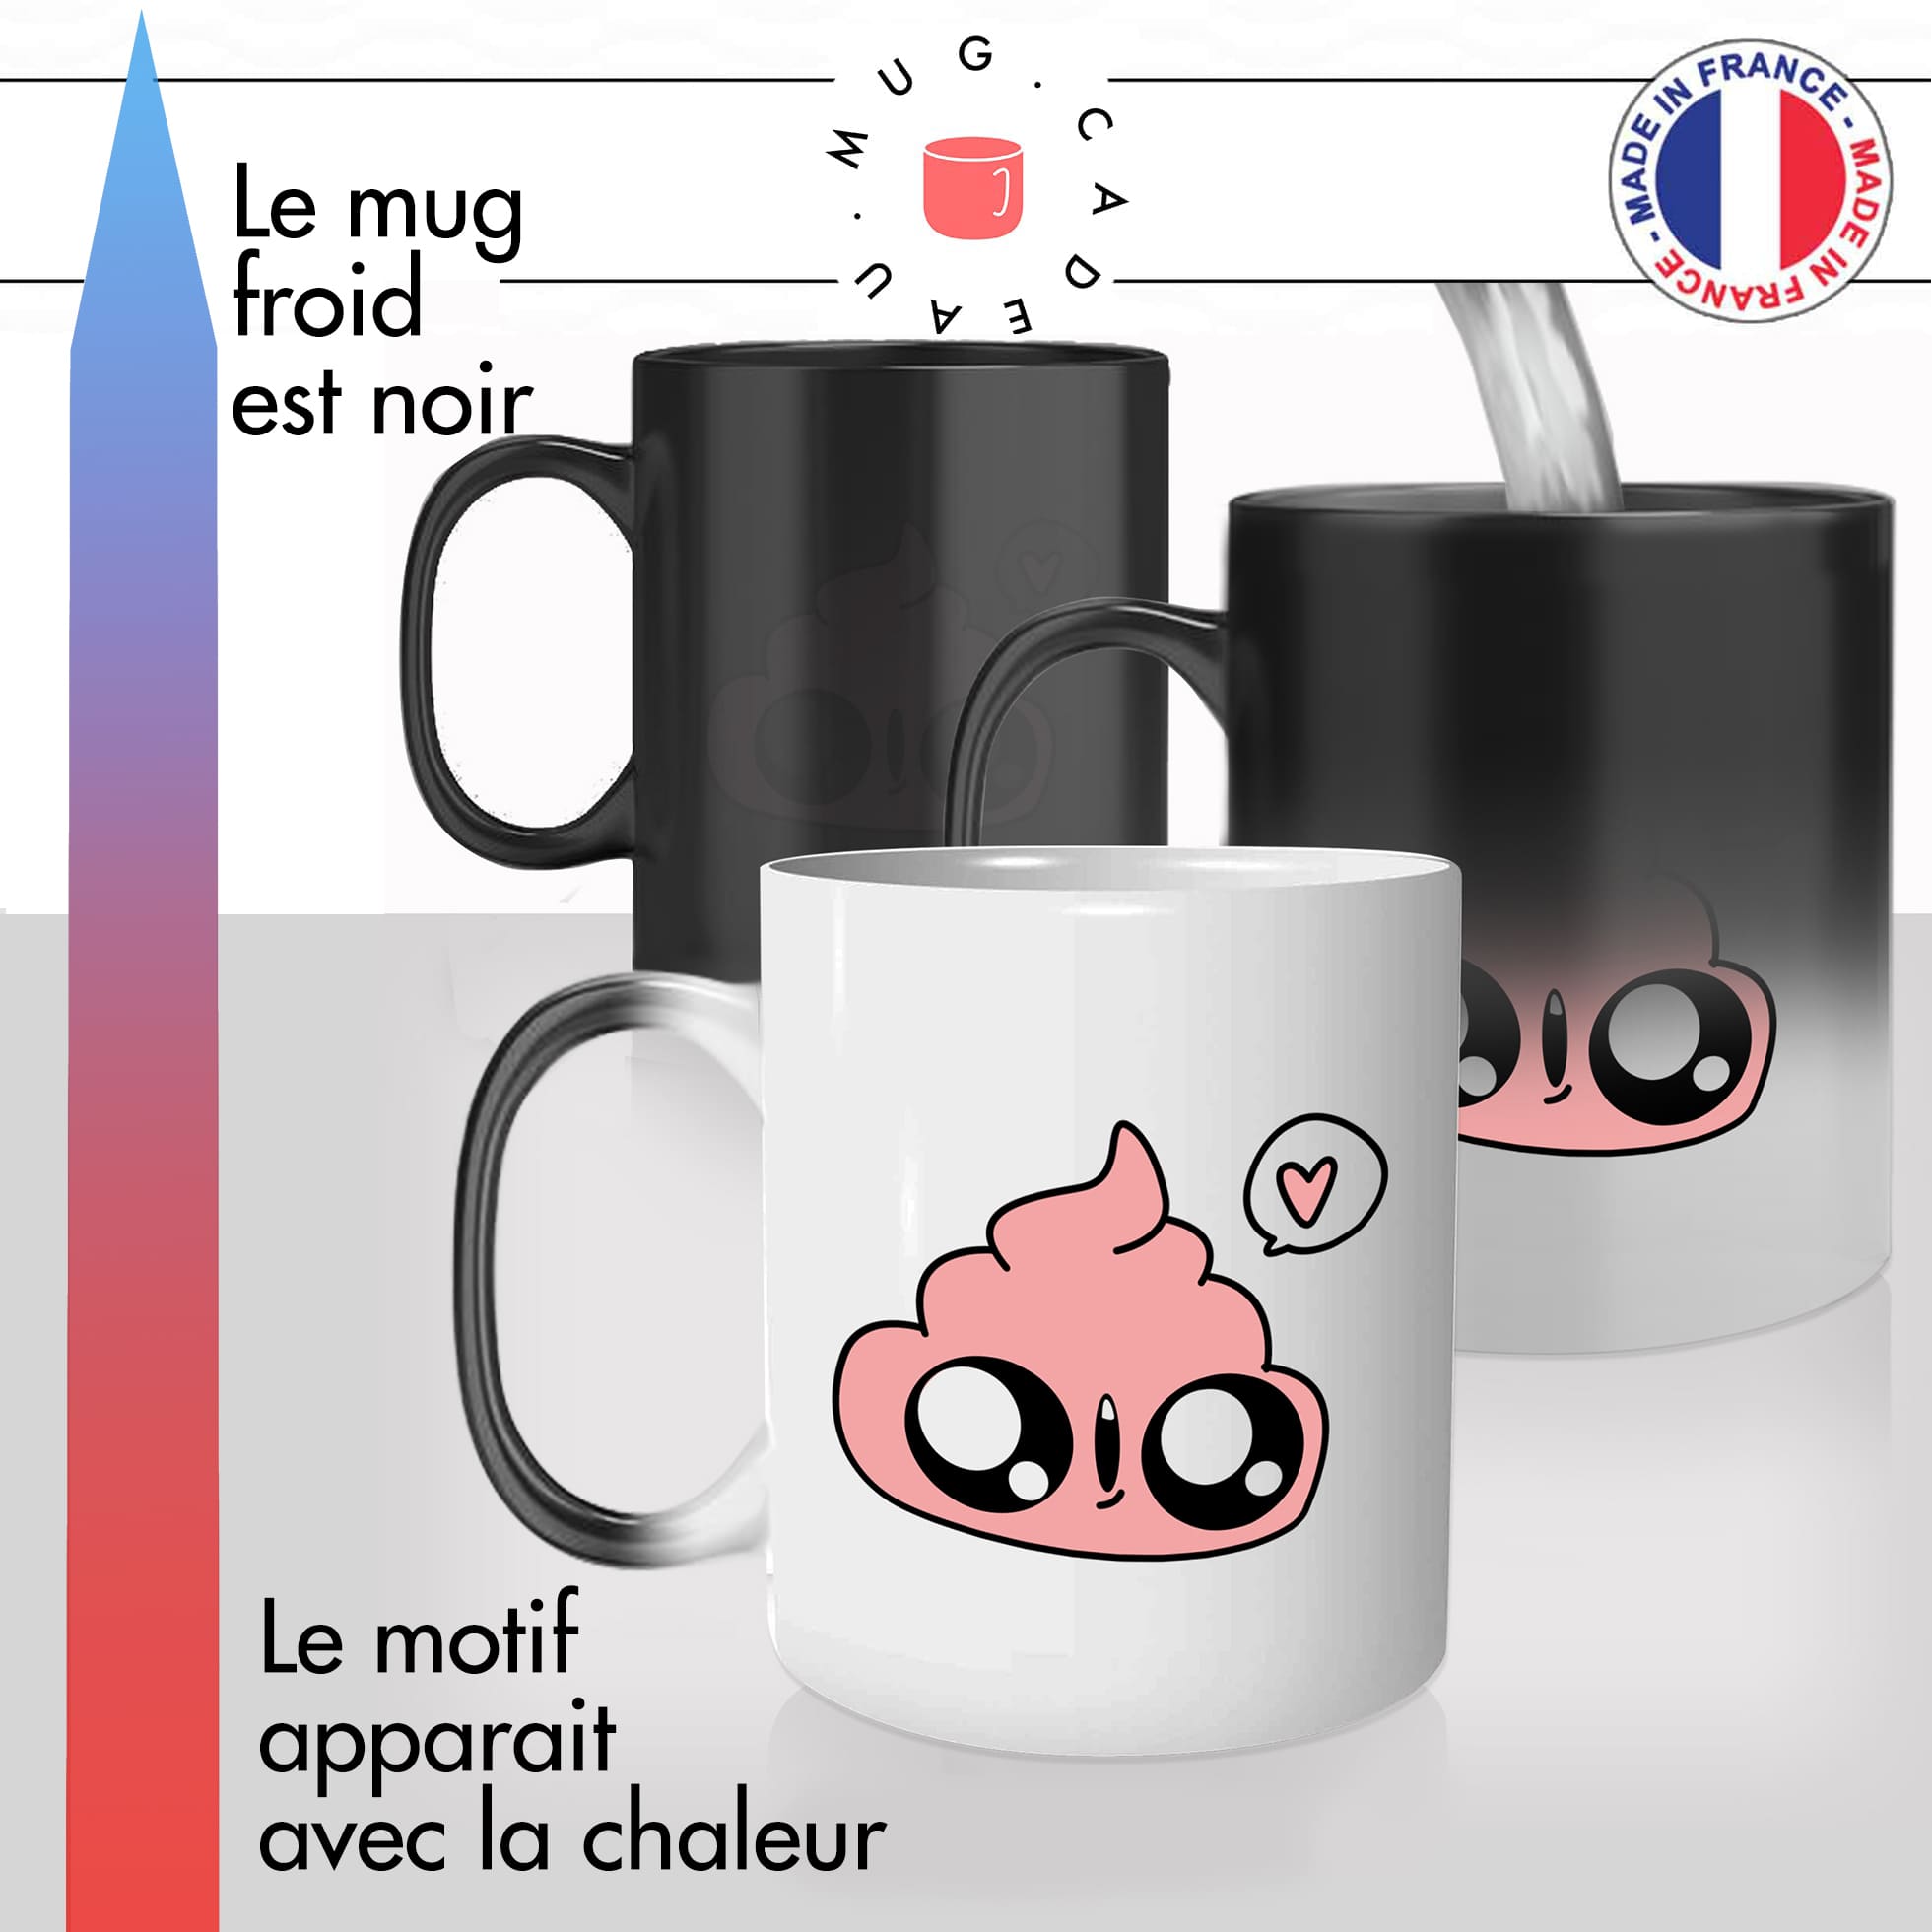 mug magique thermoréactif thermo chauffant personnalisé crotte rose emoji caca mignon drole idée cadeau fun original